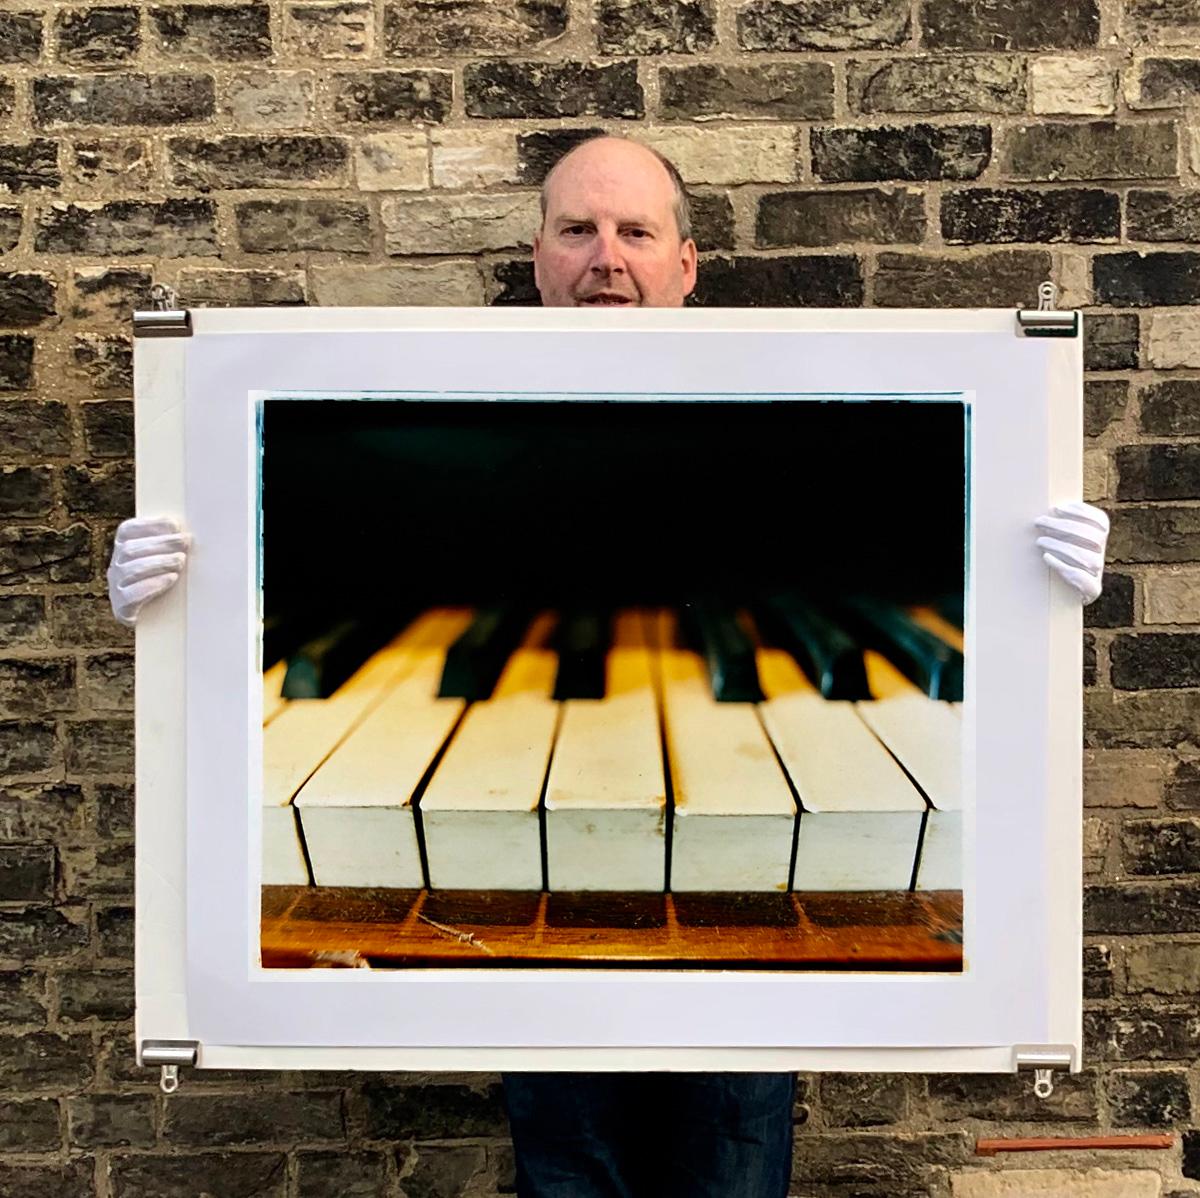 Klavierschlüssel, Stockton-on-Tees - Musikfarbenfotografie – Print von Richard Heeps